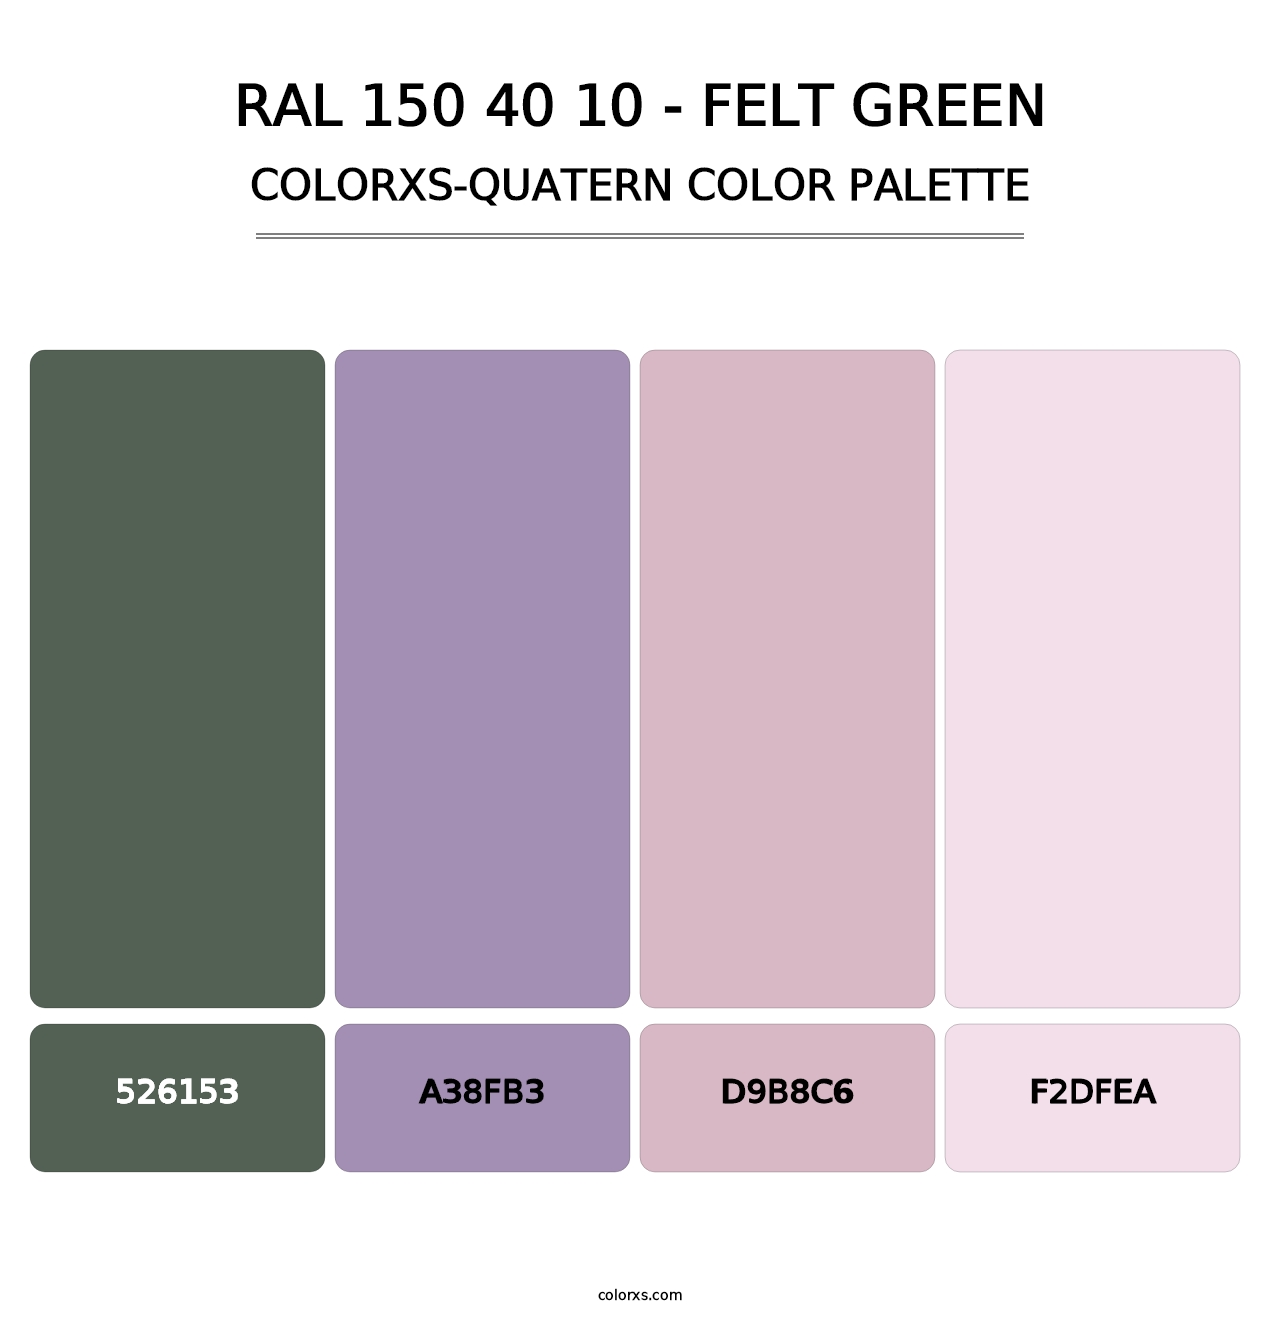 RAL 150 40 10 - Felt Green - Colorxs Quatern Palette